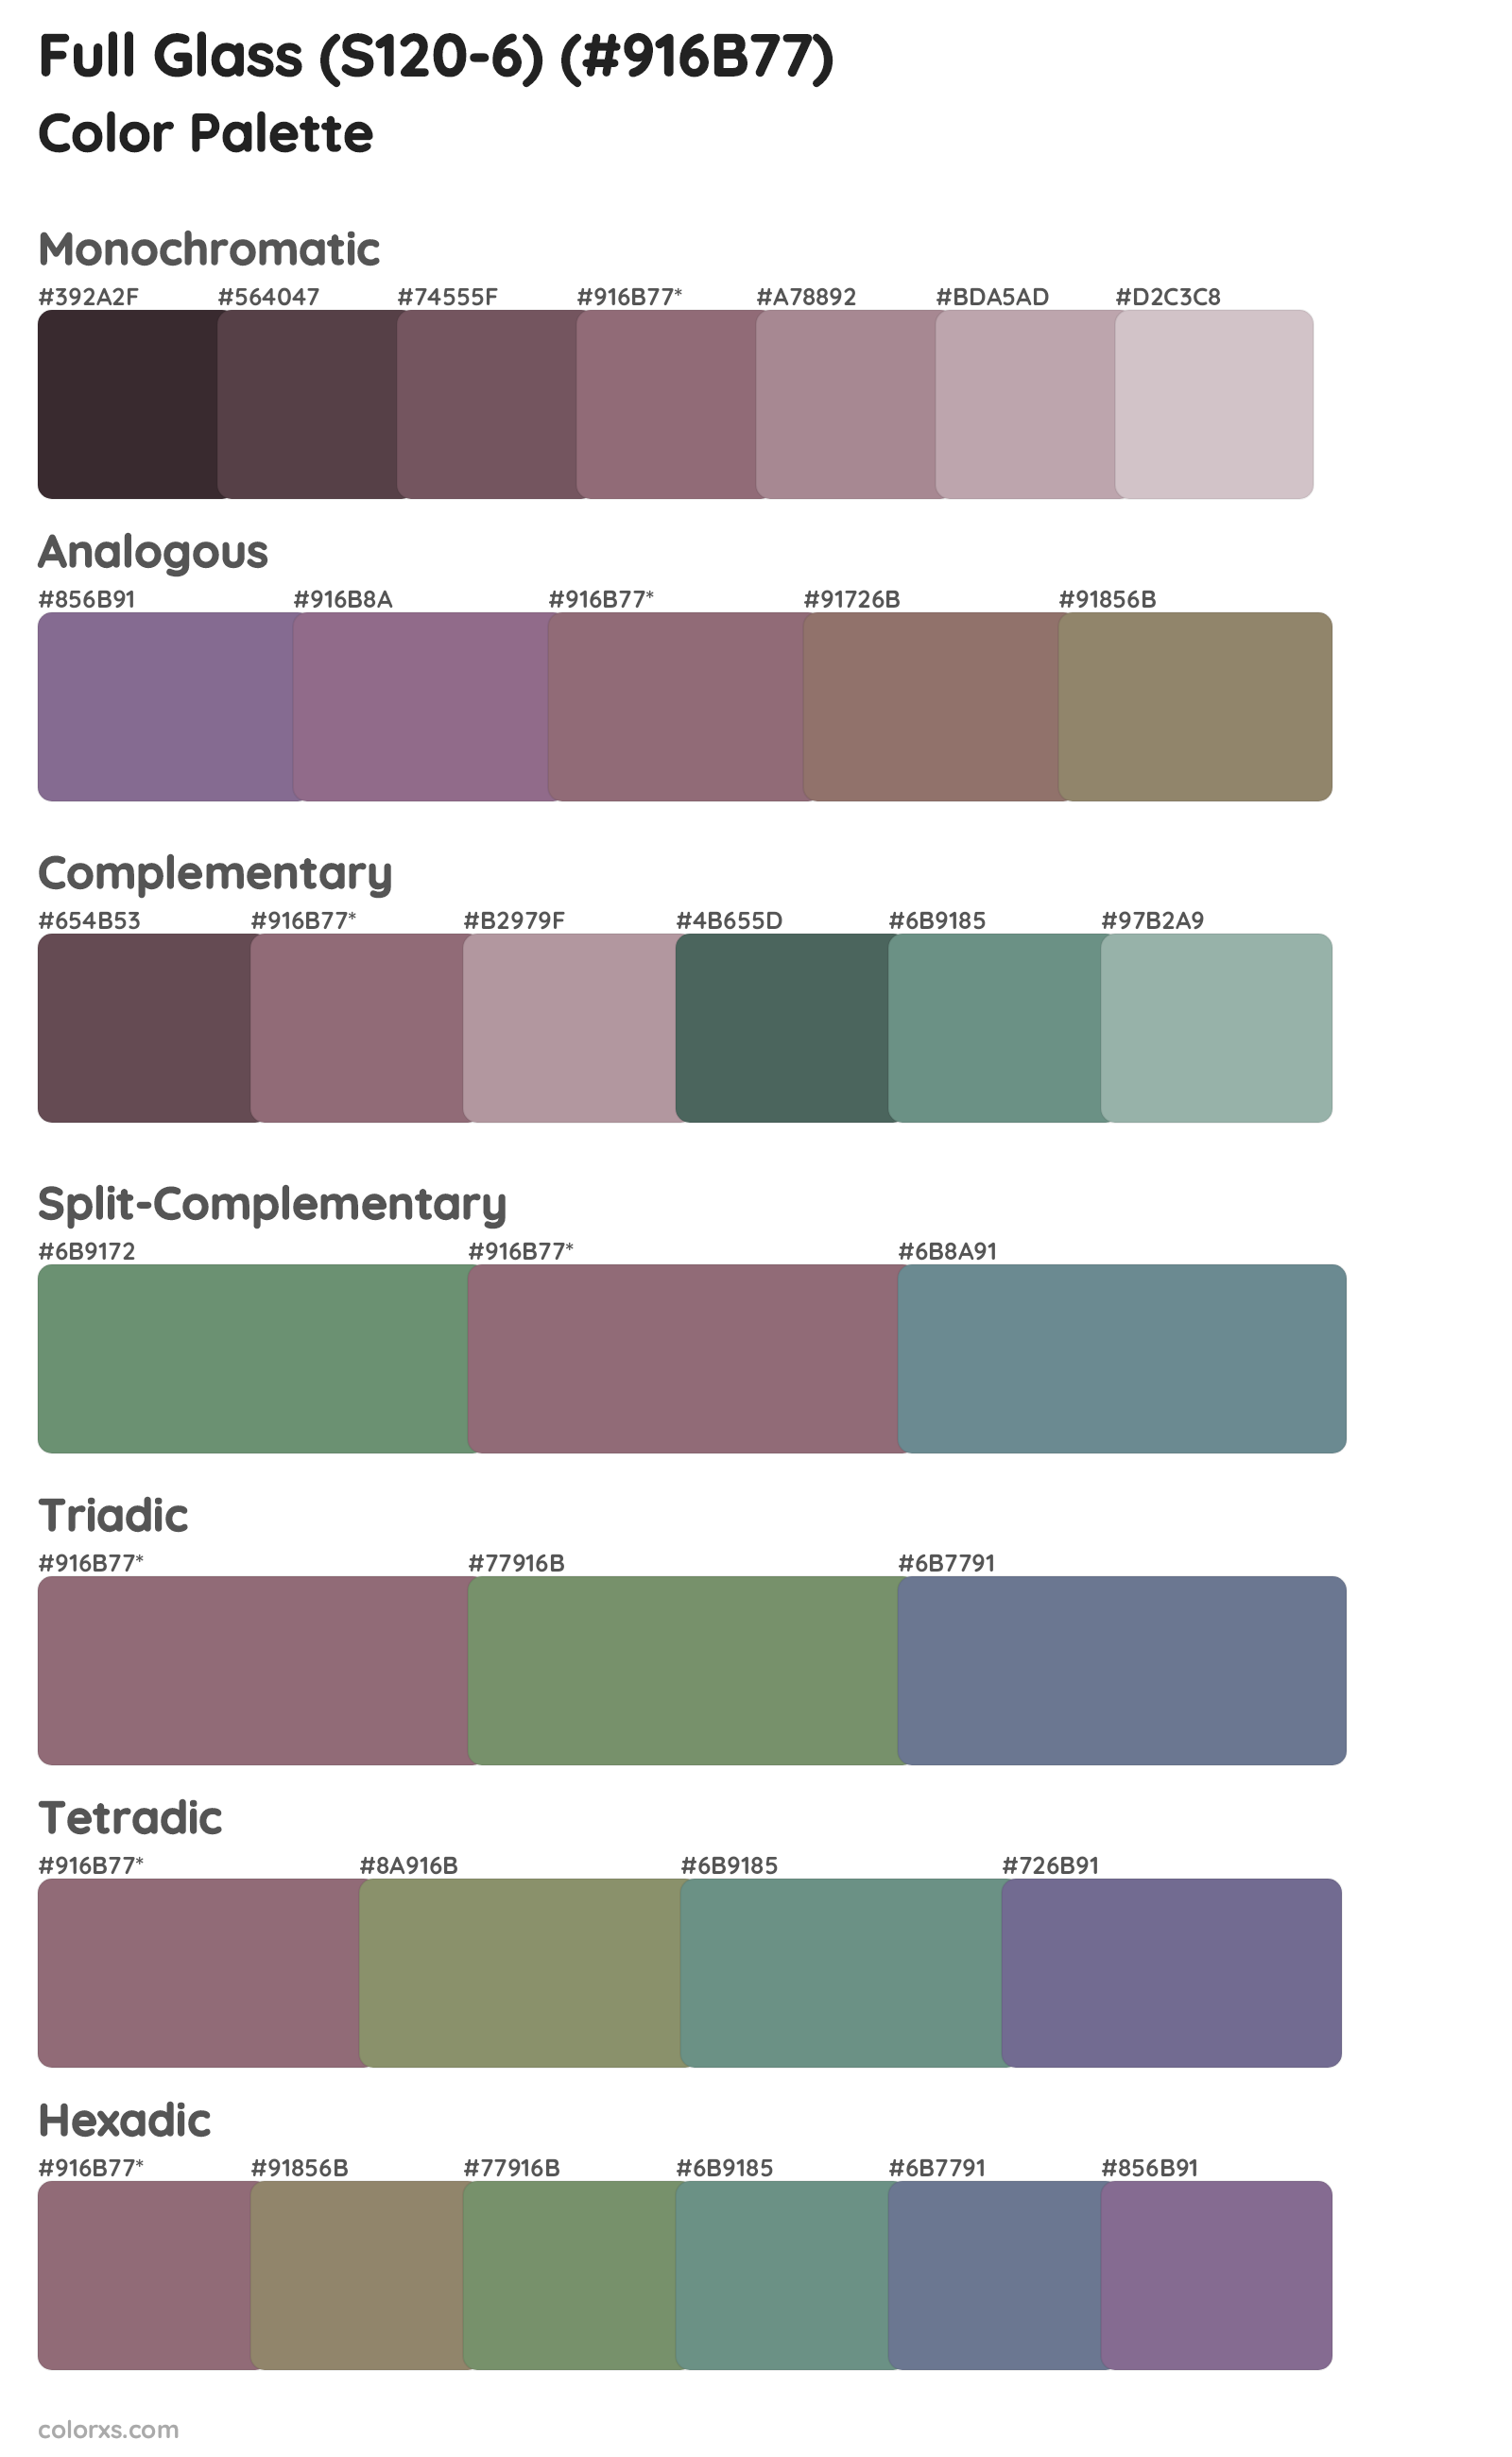 Full Glass (S120-6) Color Scheme Palettes